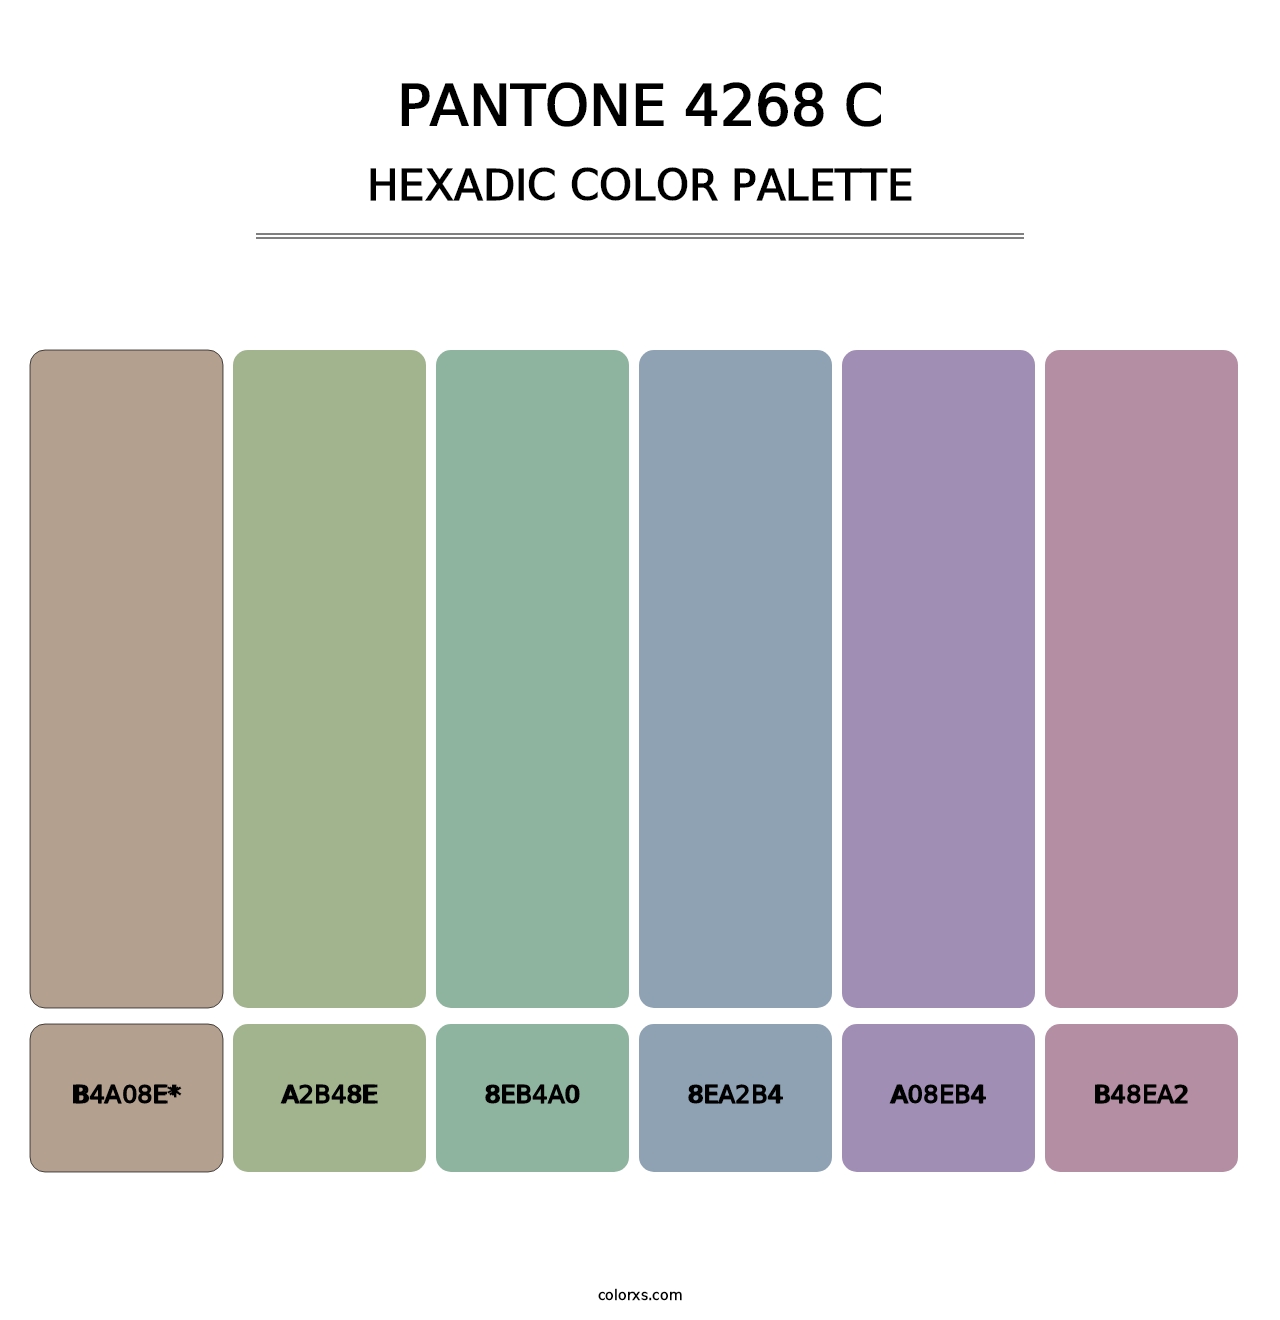 PANTONE 4268 C - Hexadic Color Palette